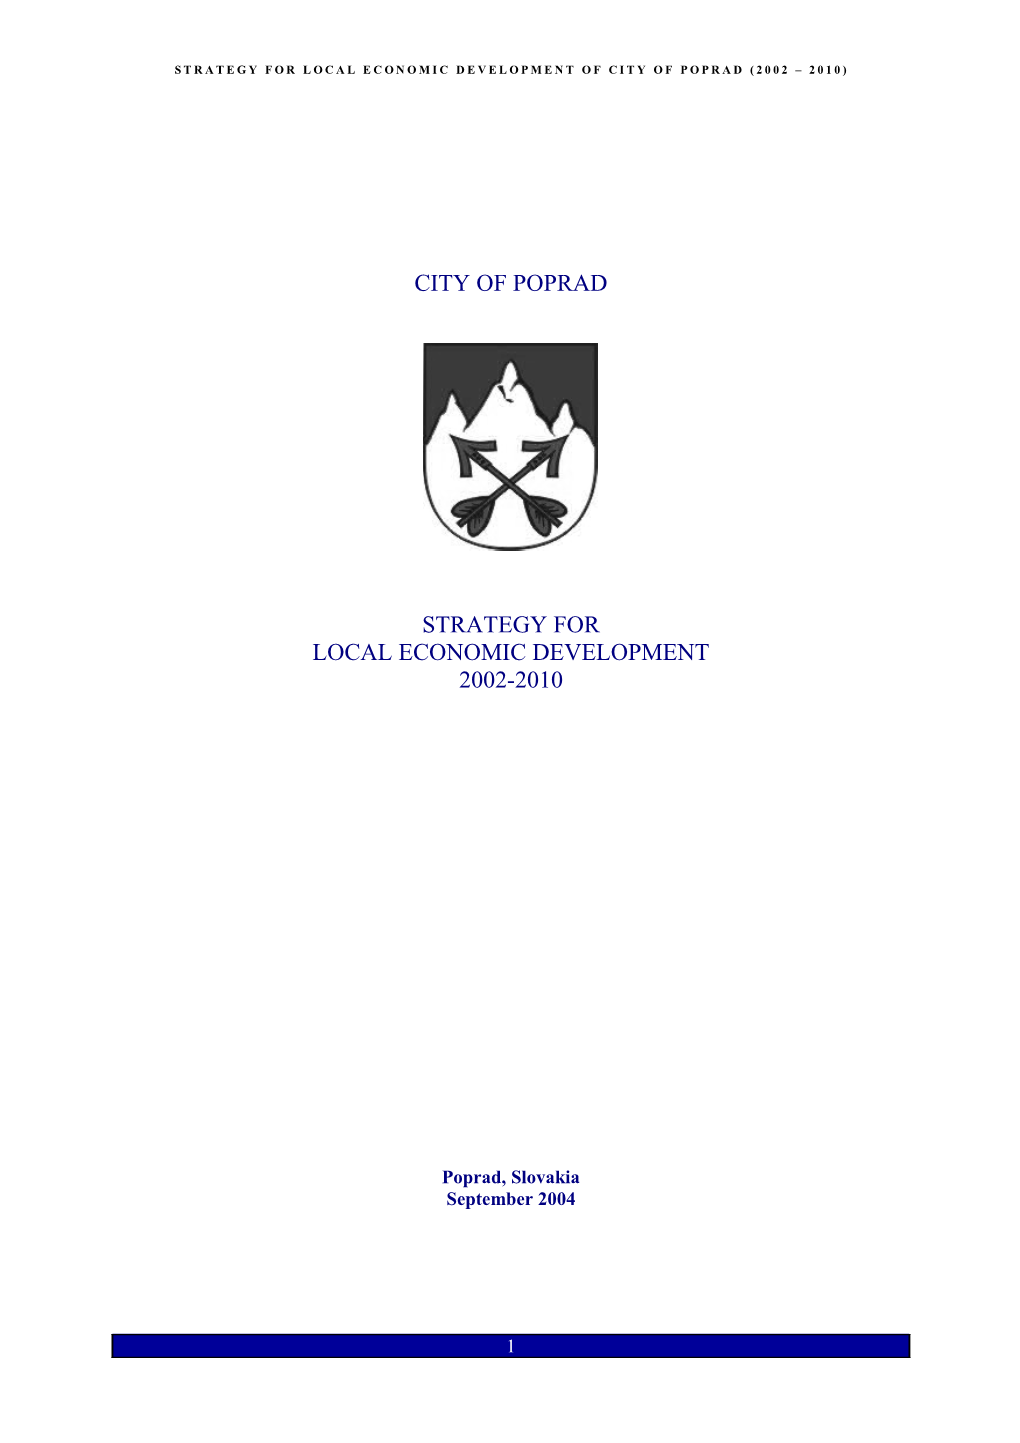 Local Economic Development Strategic Planning and Practice Casebook